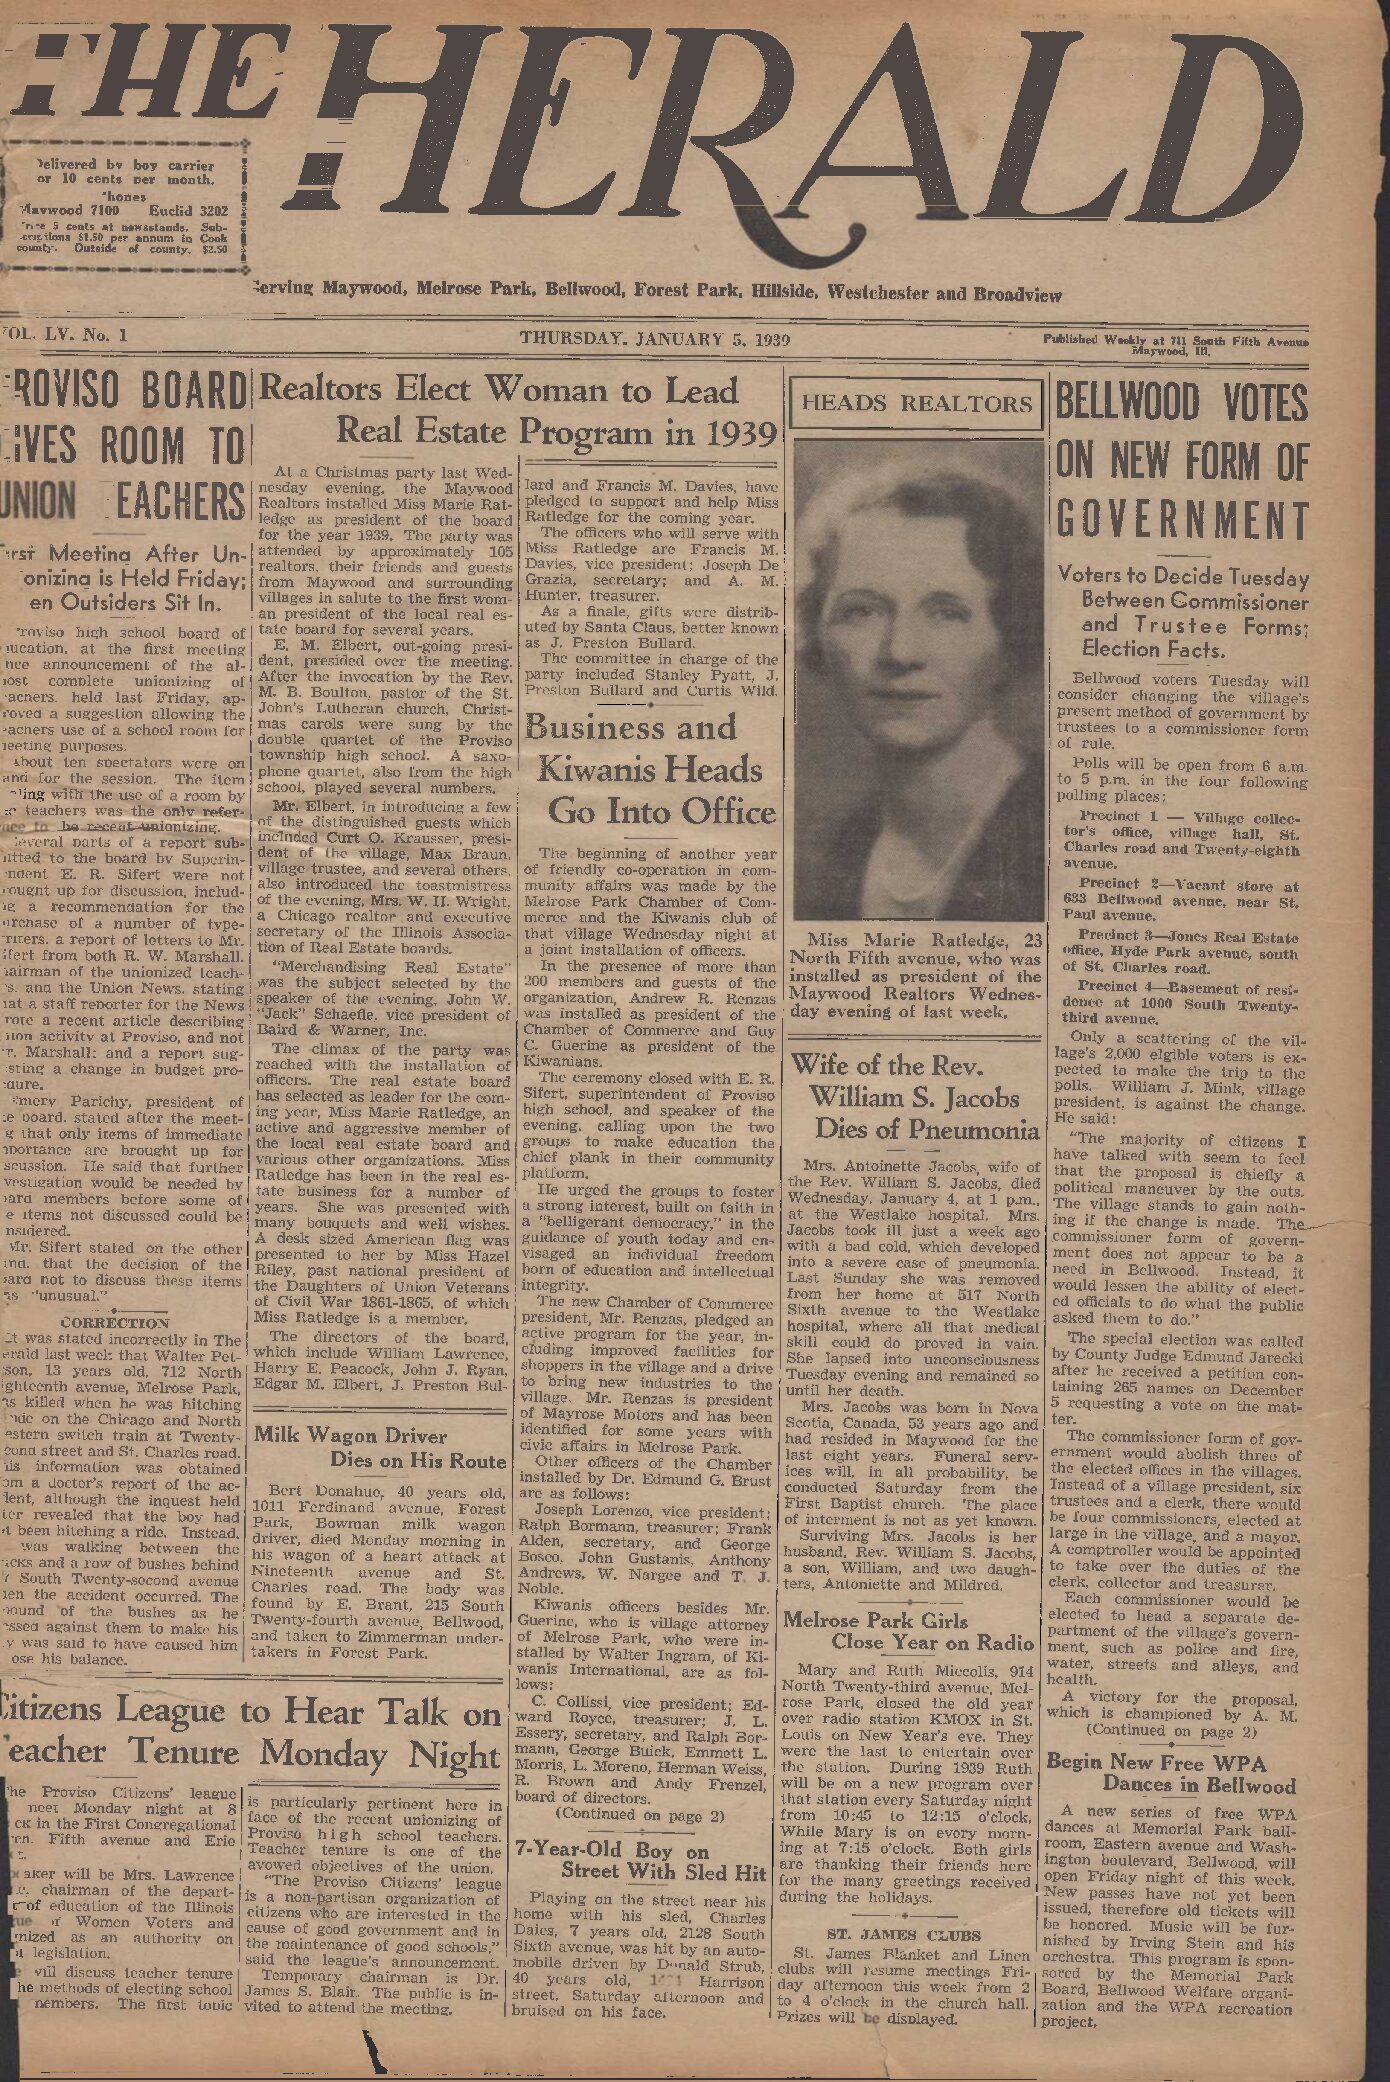 The Herald – 19390105